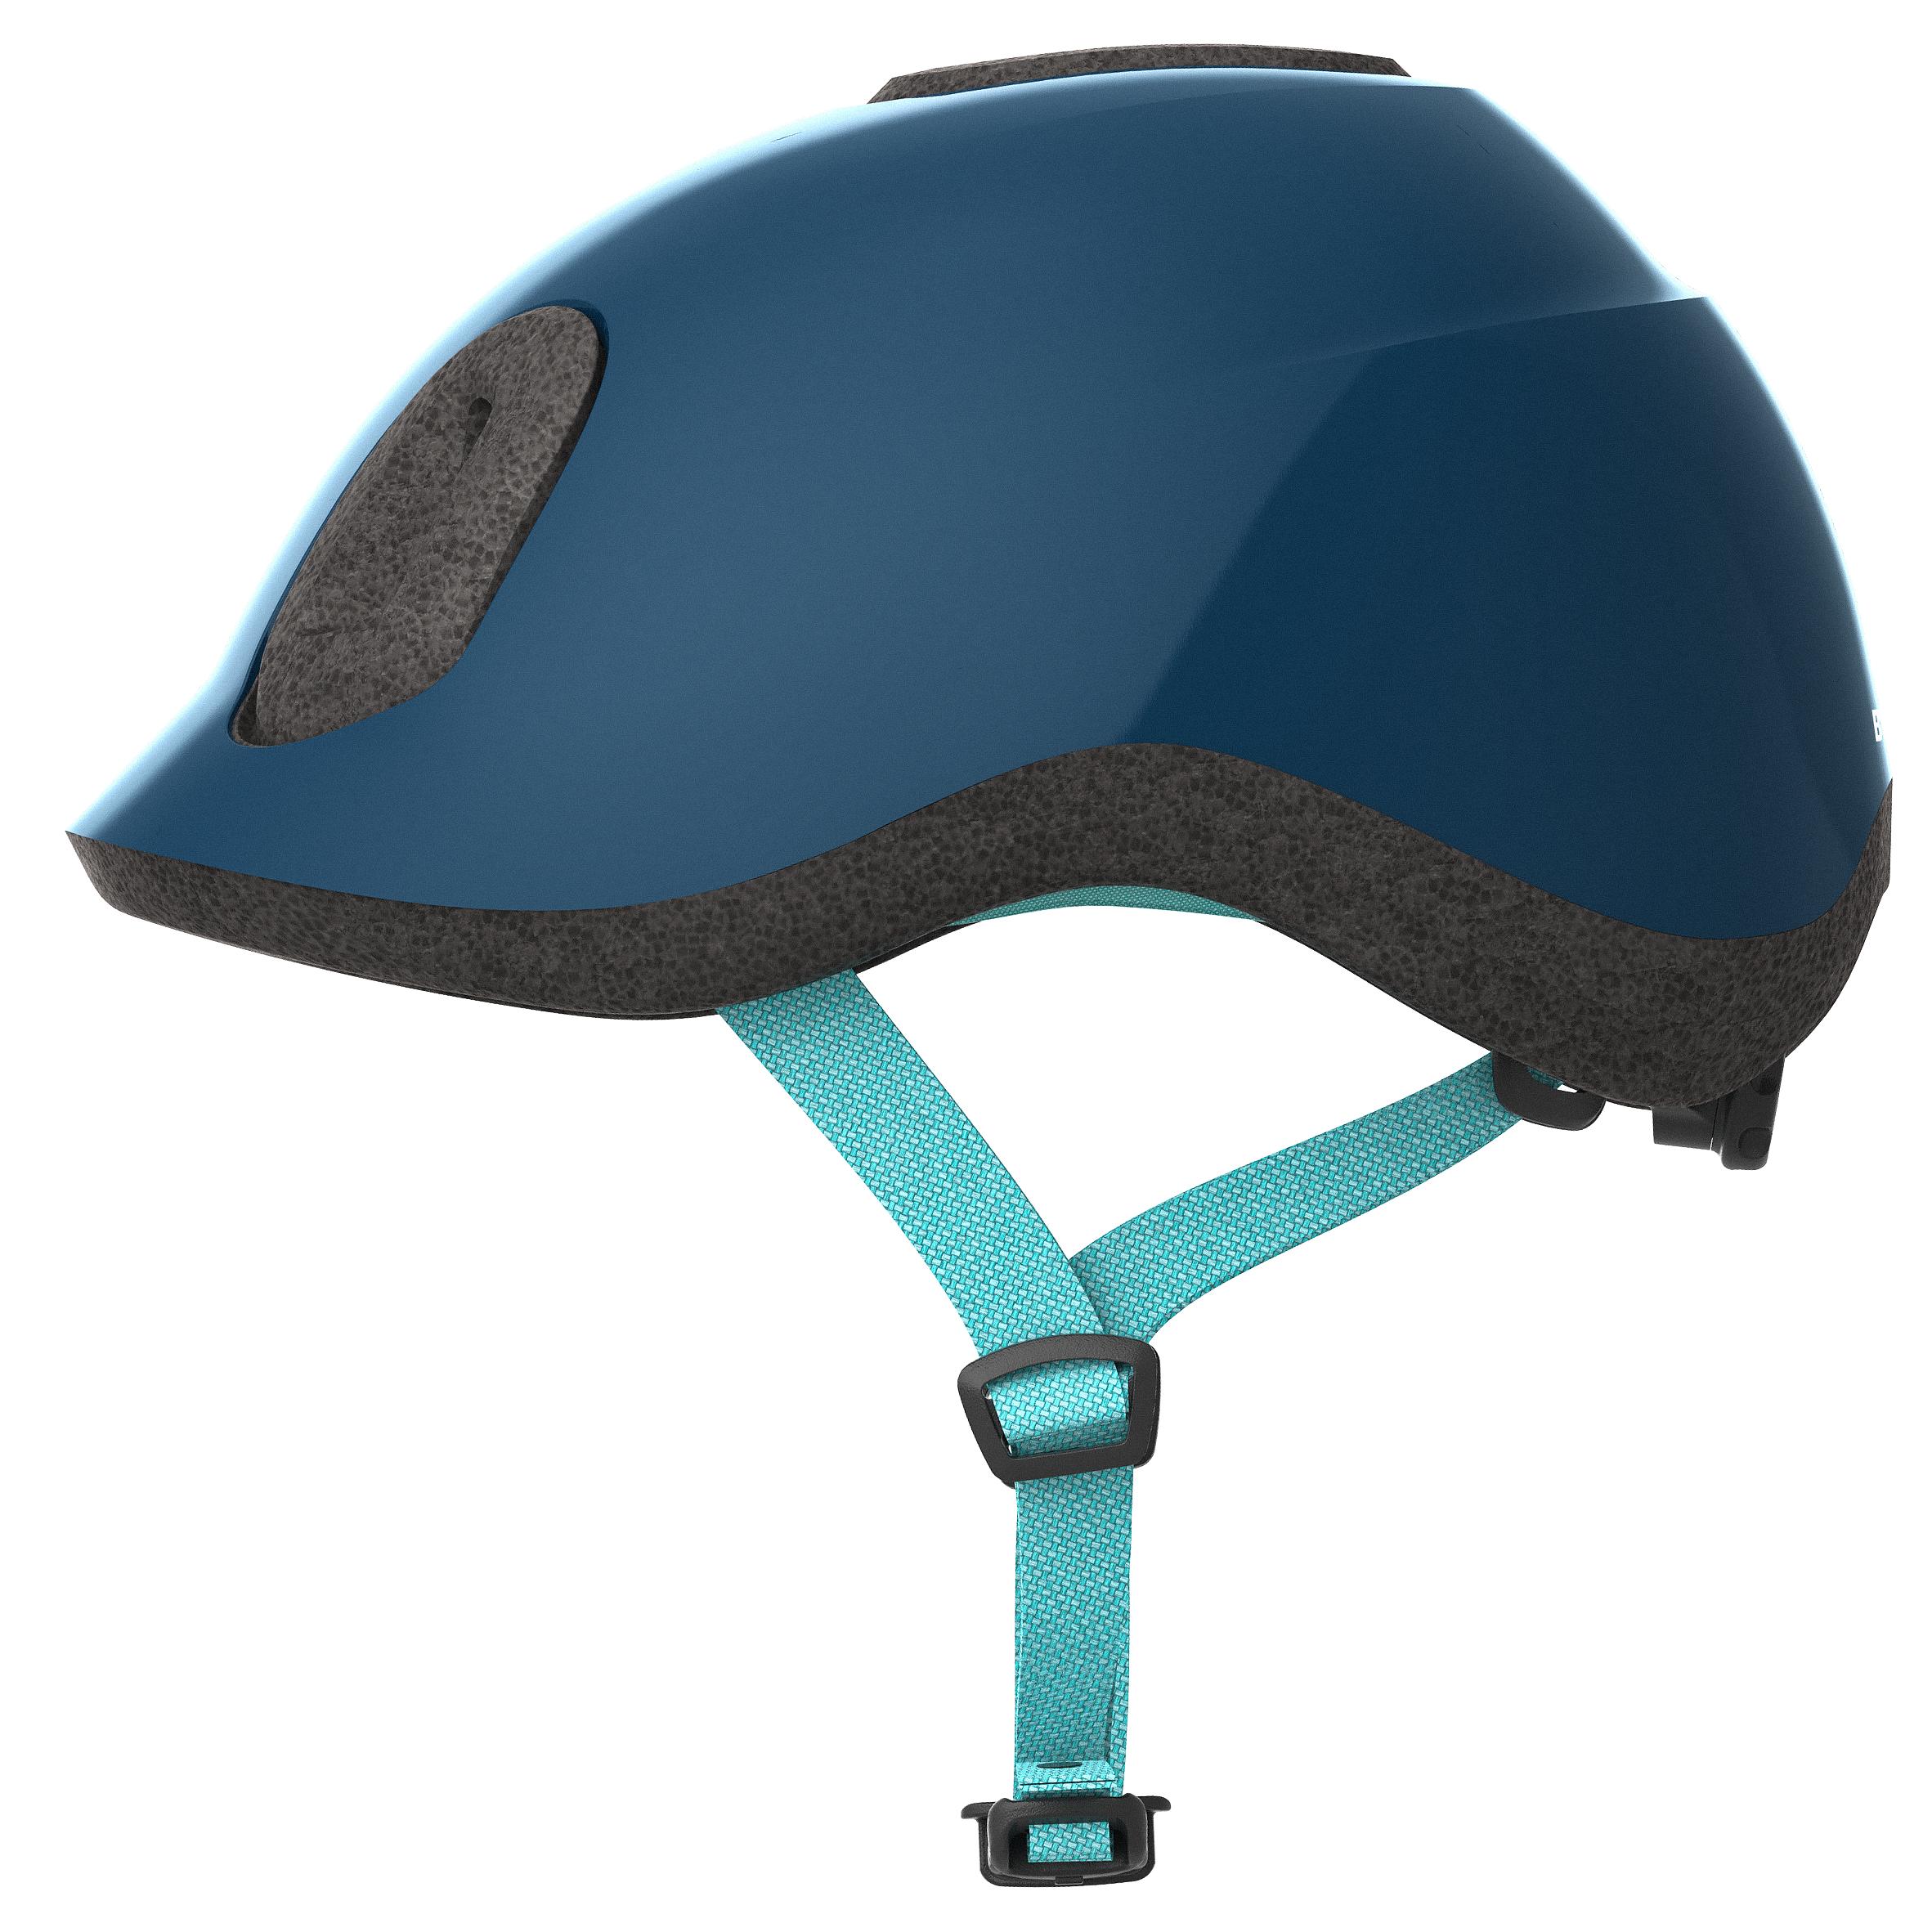 decathlon baby helmet